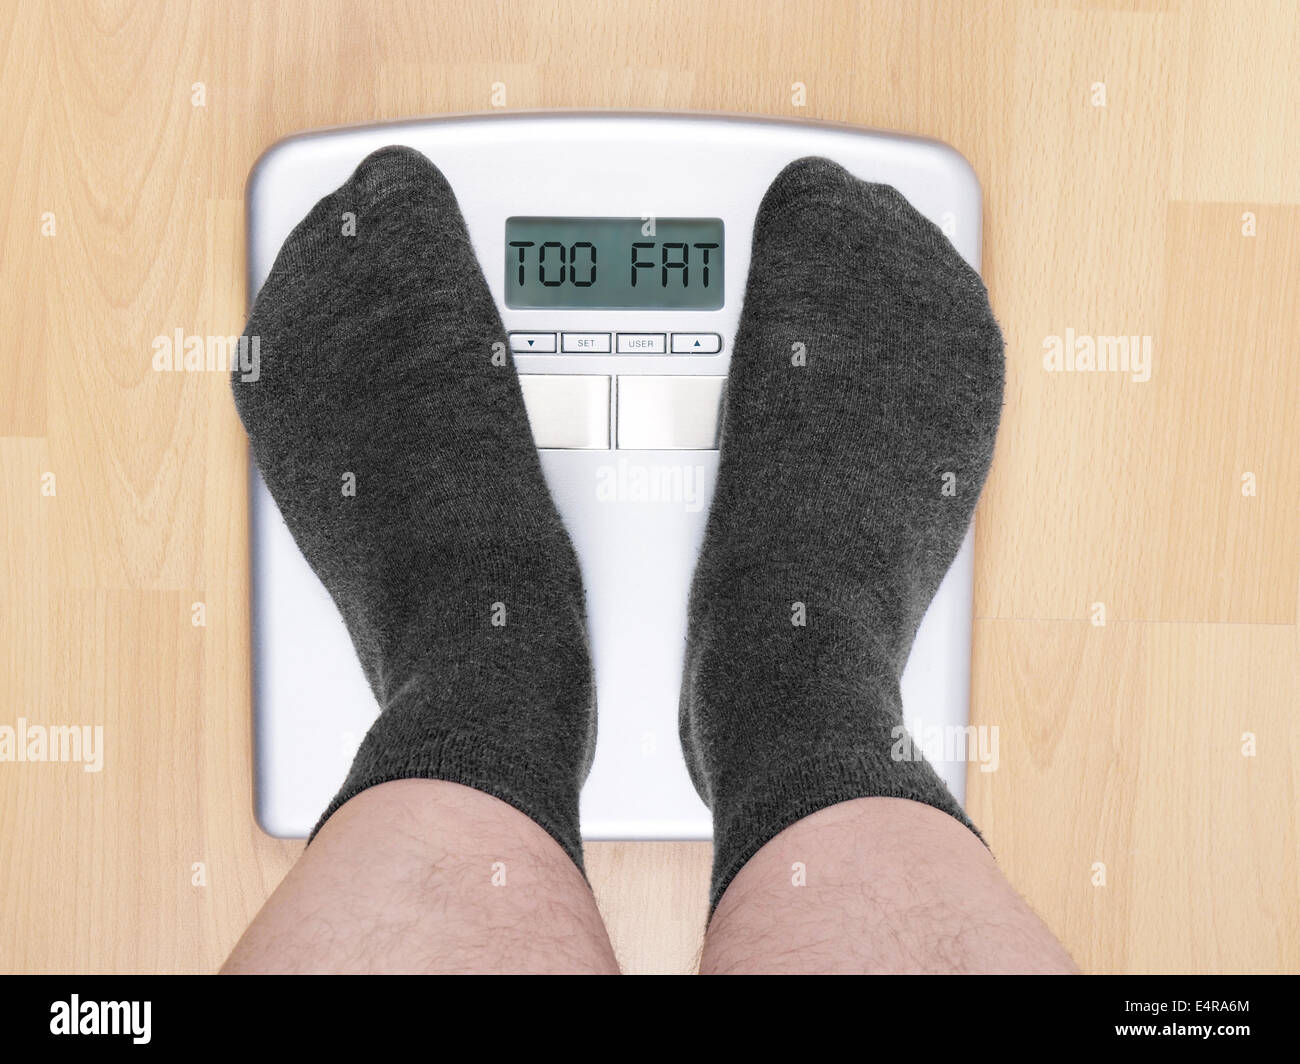 https://c8.alamy.com/comp/E4RA6M/overweight-man-on-personal-scales-E4RA6M.jpg